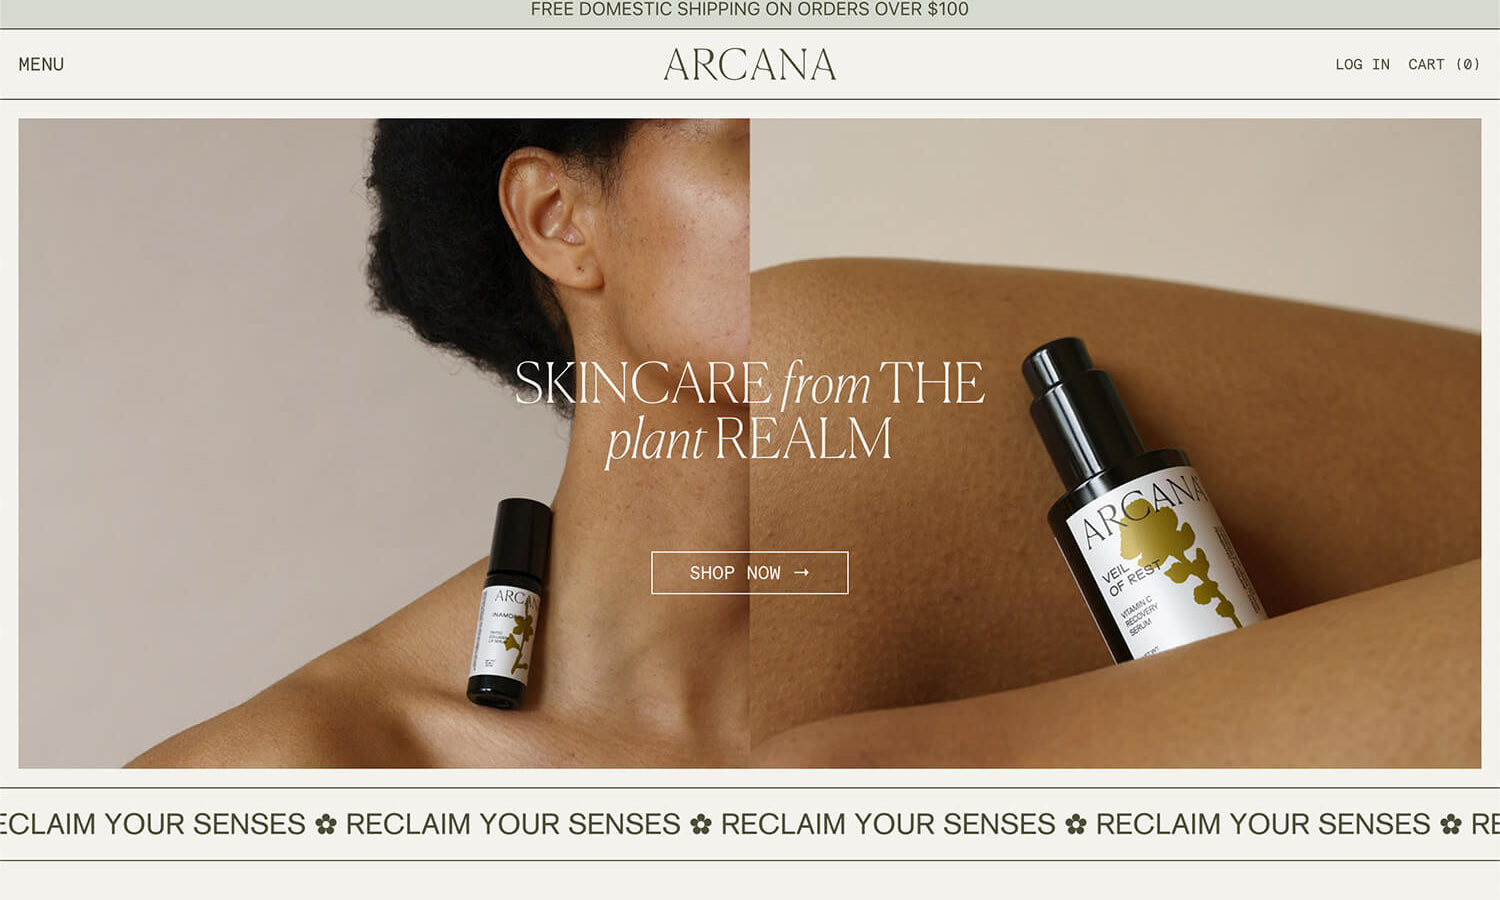 Shopify Website Design Inspiration - Arcana